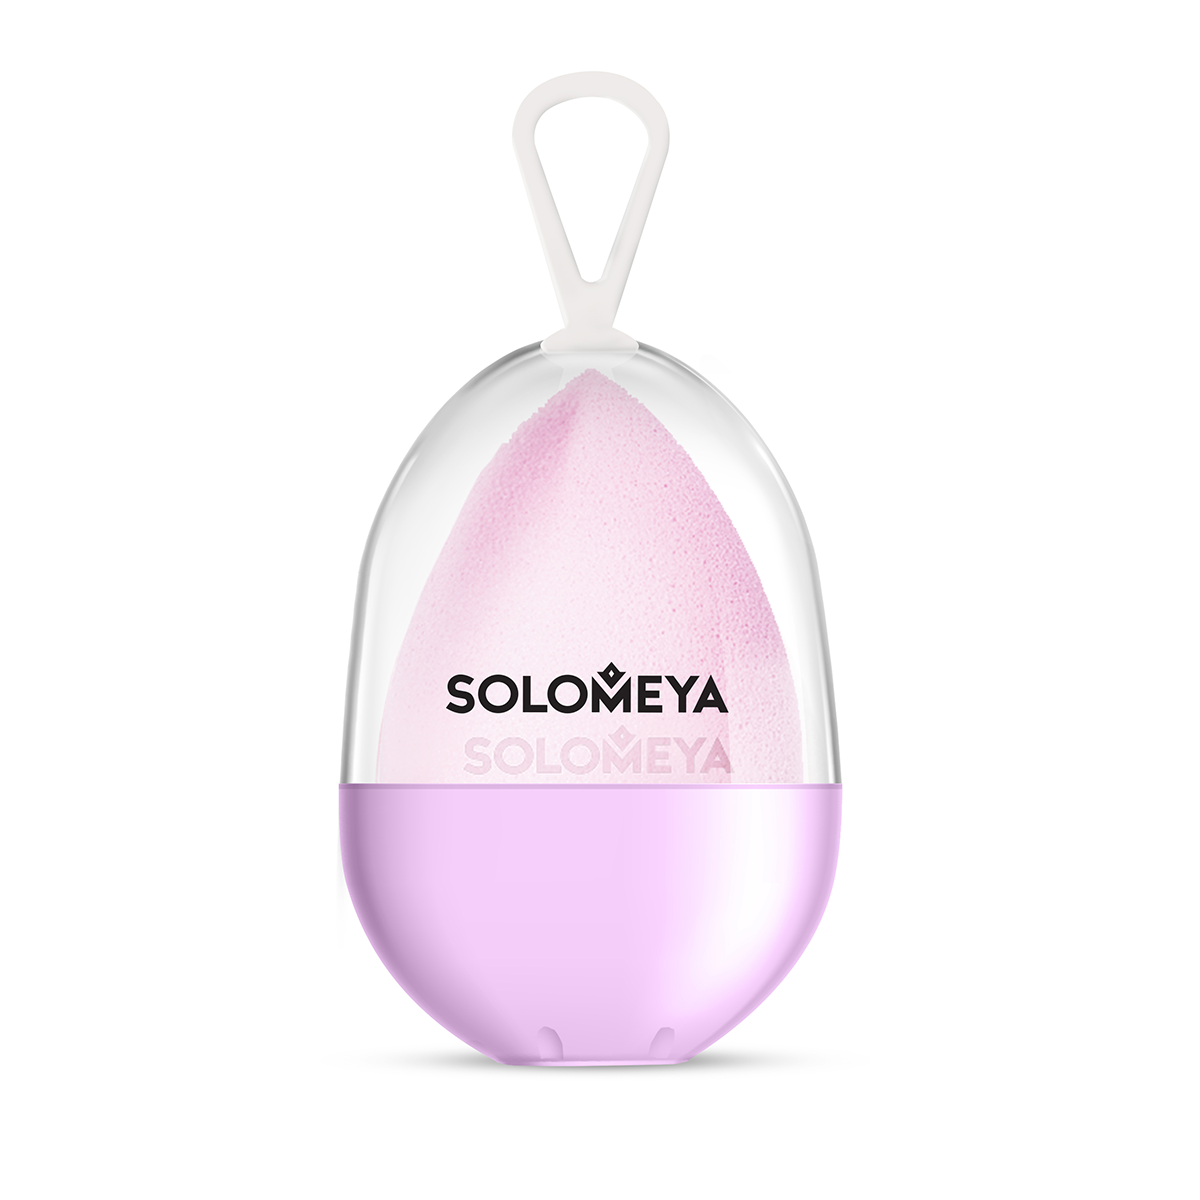 SOLOMEYA Спонж косметический для макияжа со срезом лиловый / Flat End blending sponge,  lilac 1 шт спонж косметический relouis из латекса 1 г х 6 шт